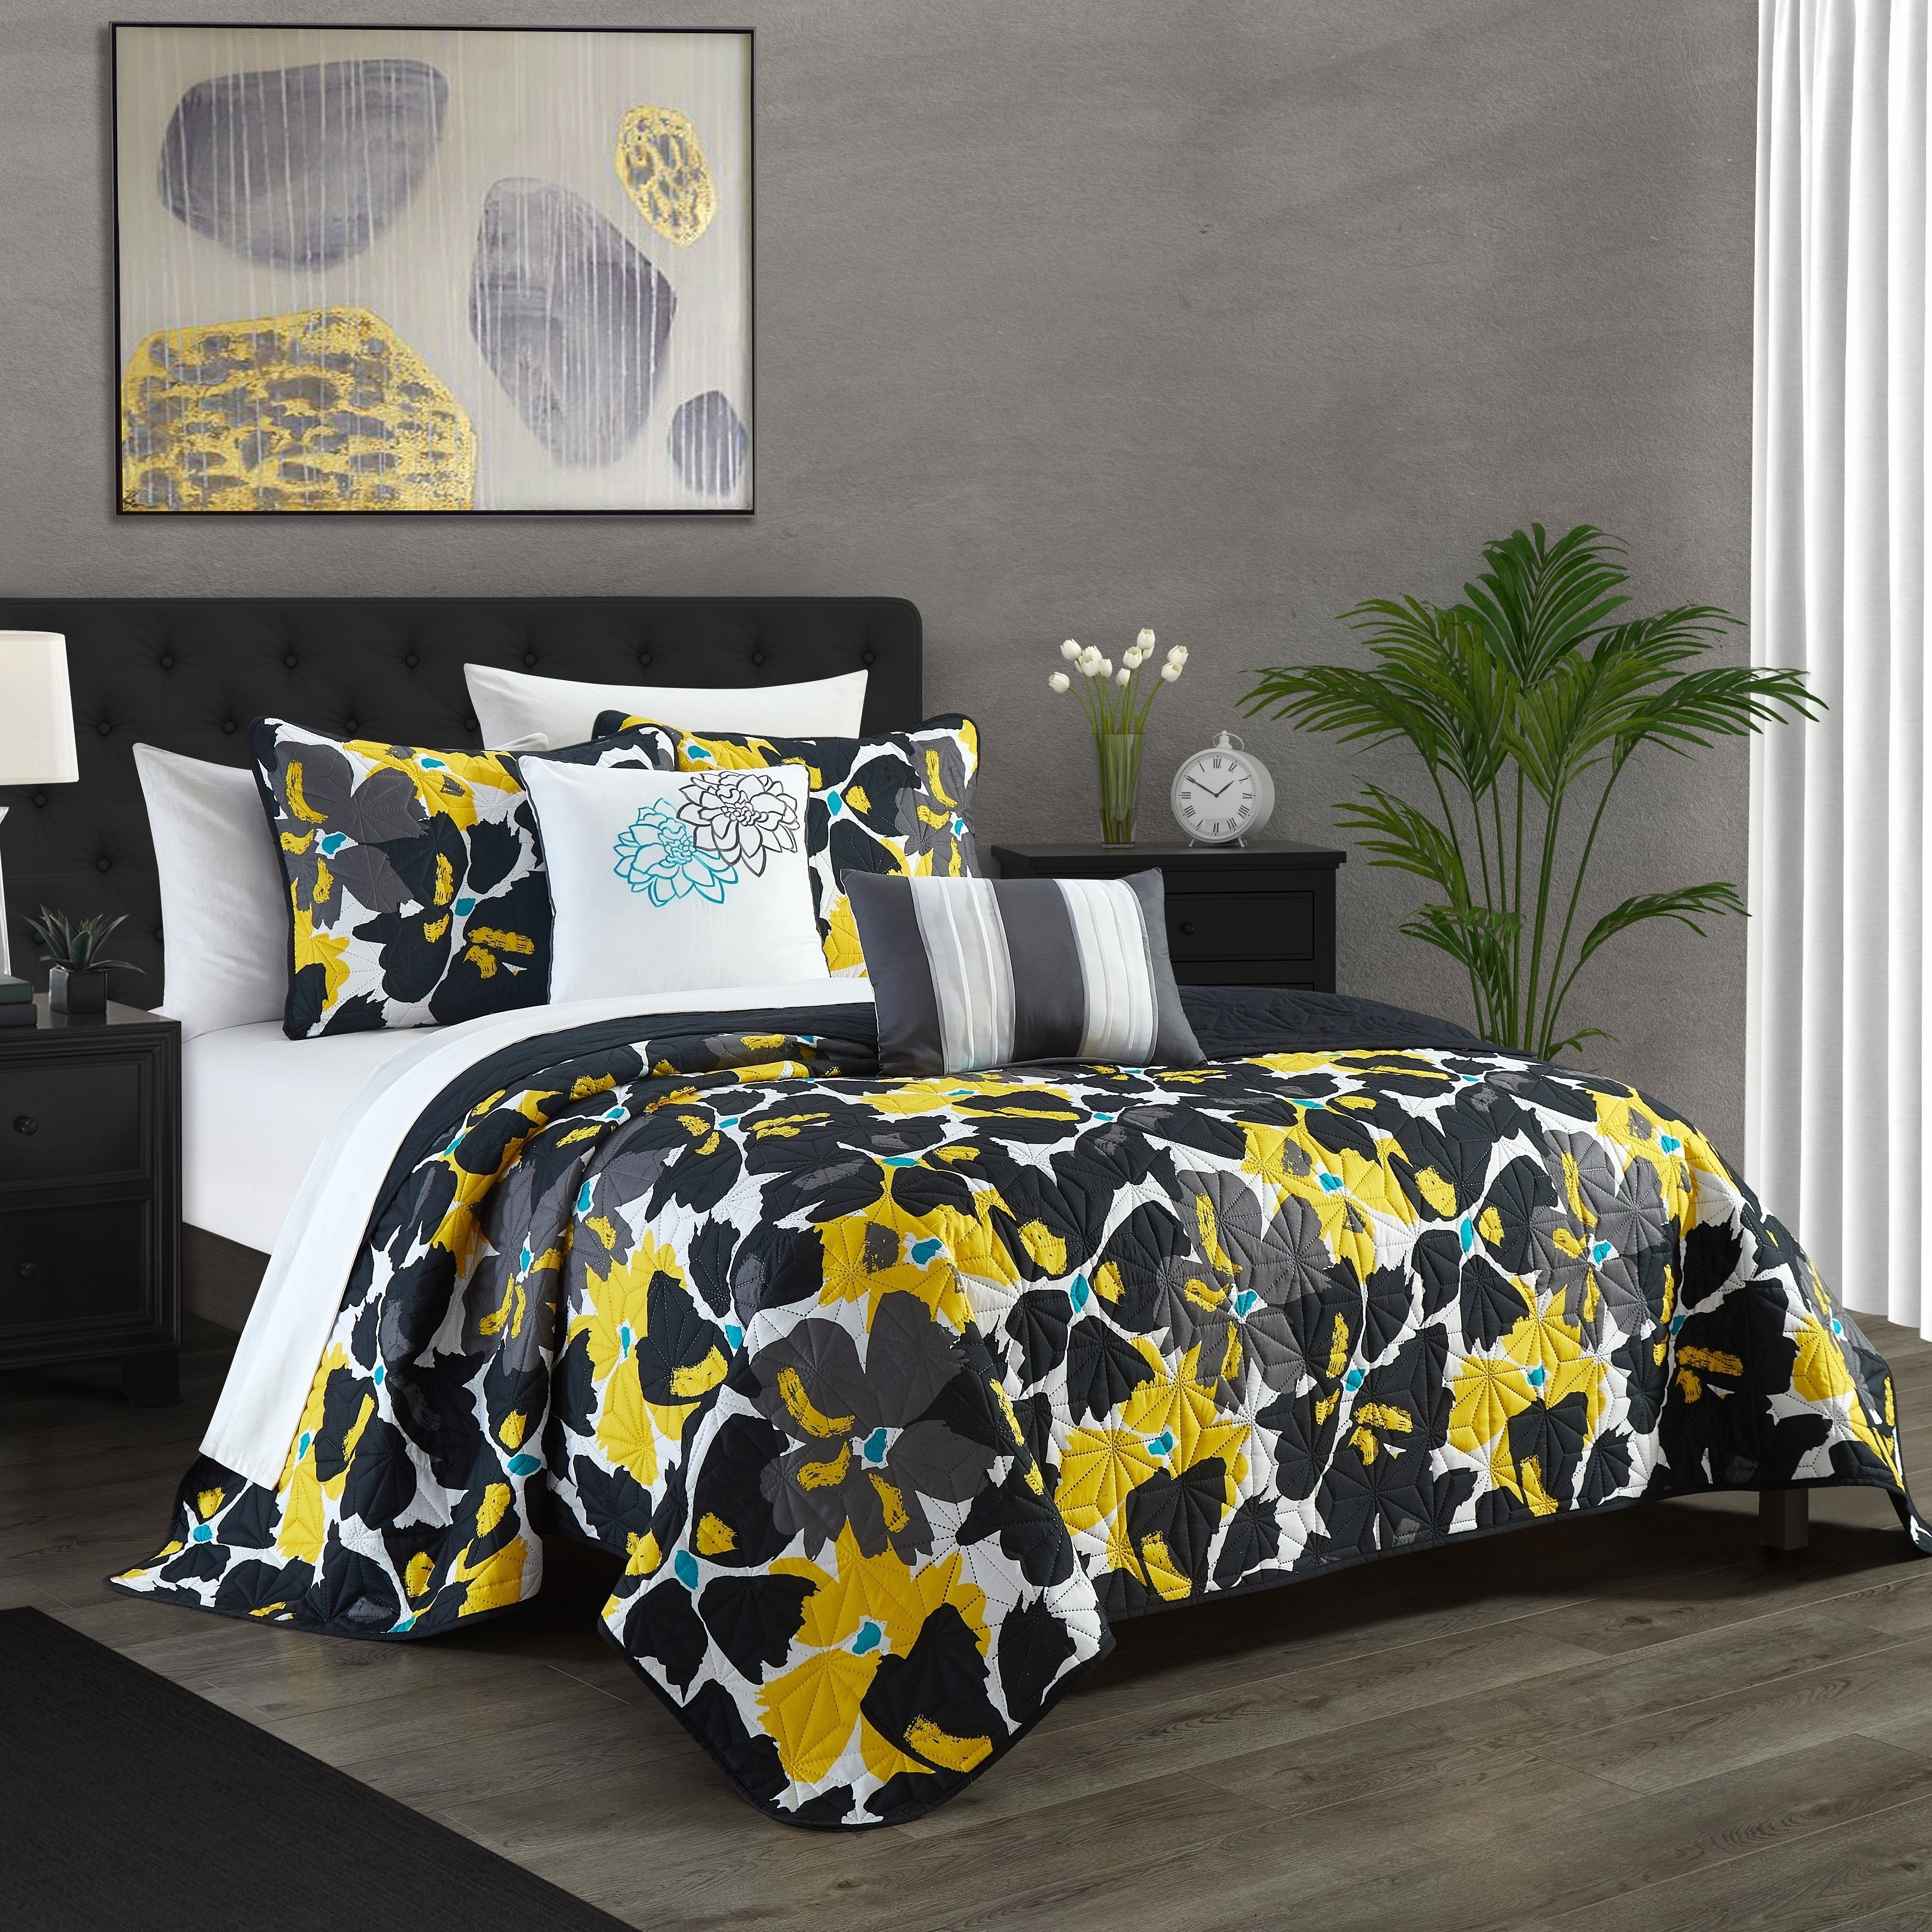 Aster 5 Piece Quilt Set Contemporary Floral Design Bedding - Black, Queen